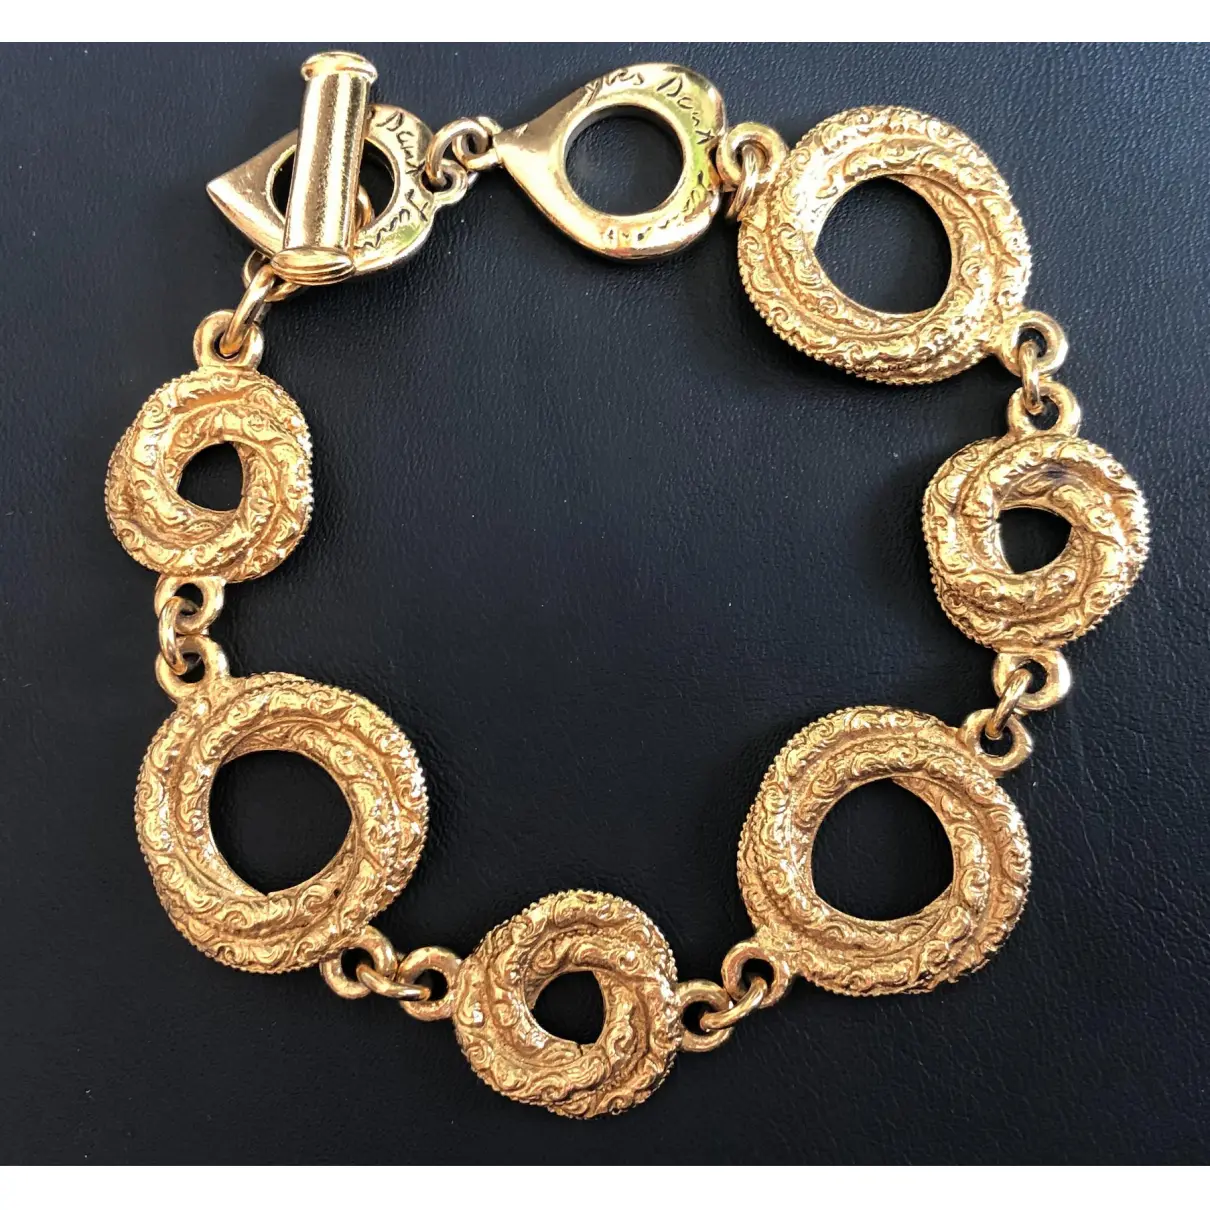 Buy Yves Saint Laurent Gold Metal Bracelet online - Vintage